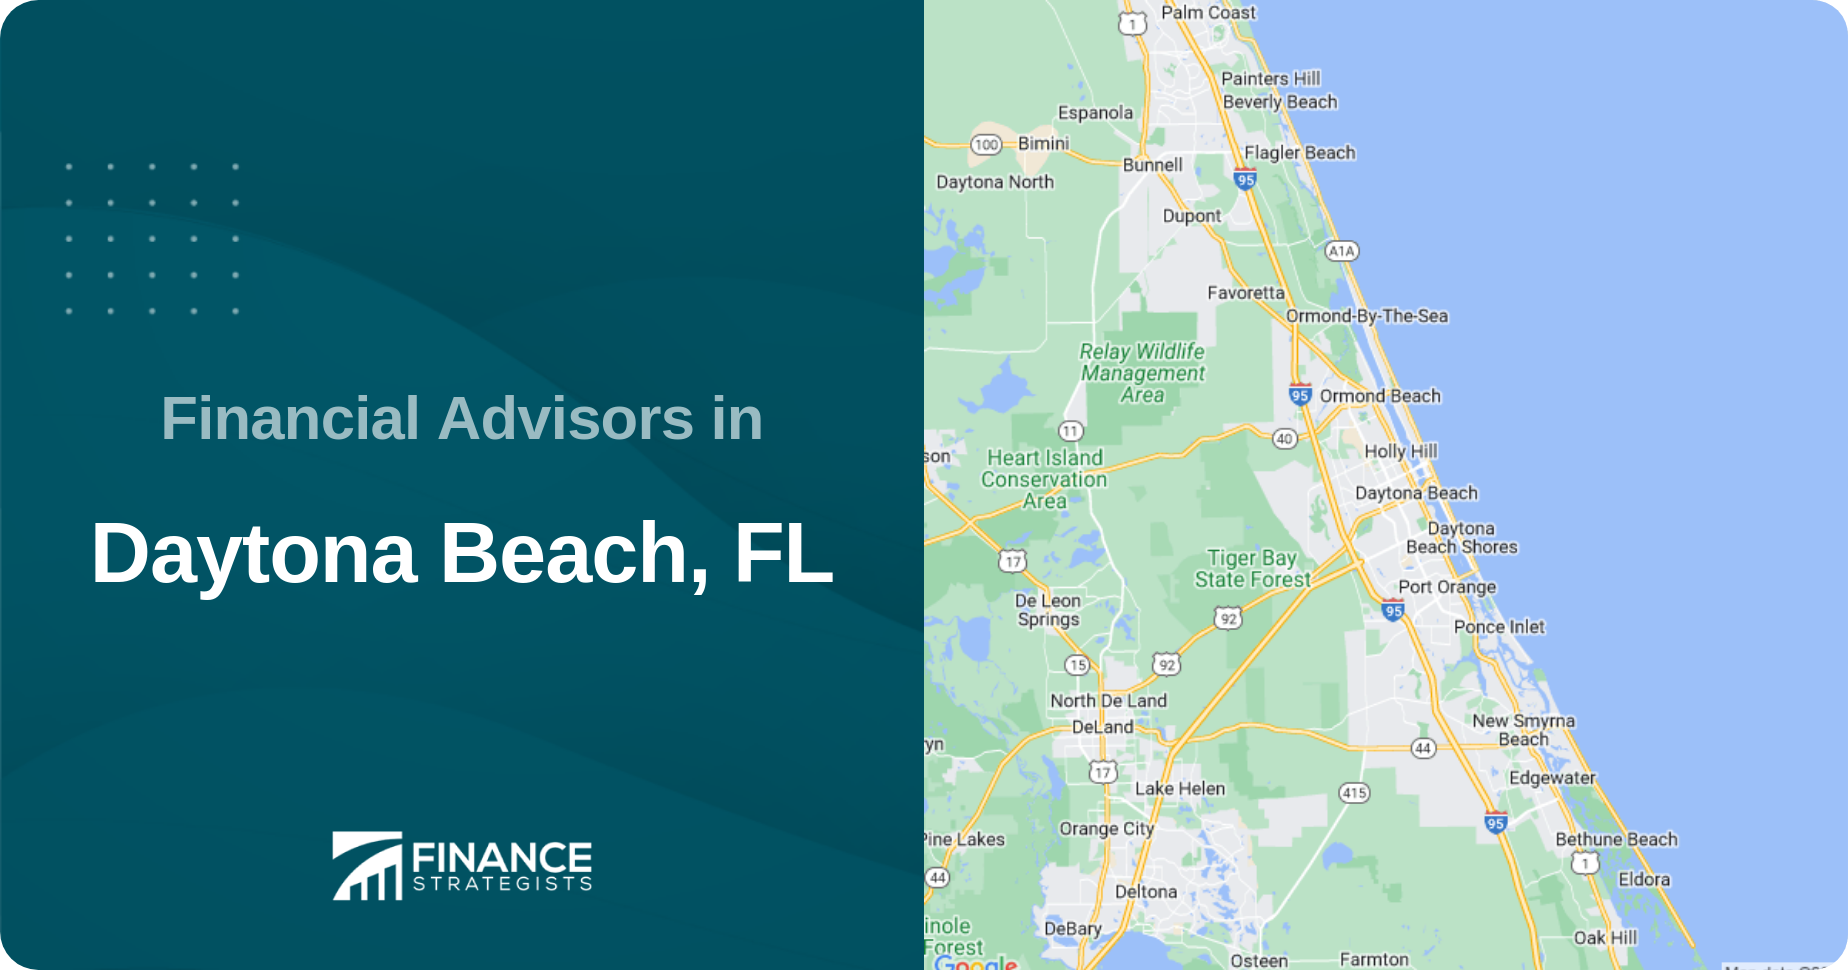 Financial Advisors in Daytona Beach, FL